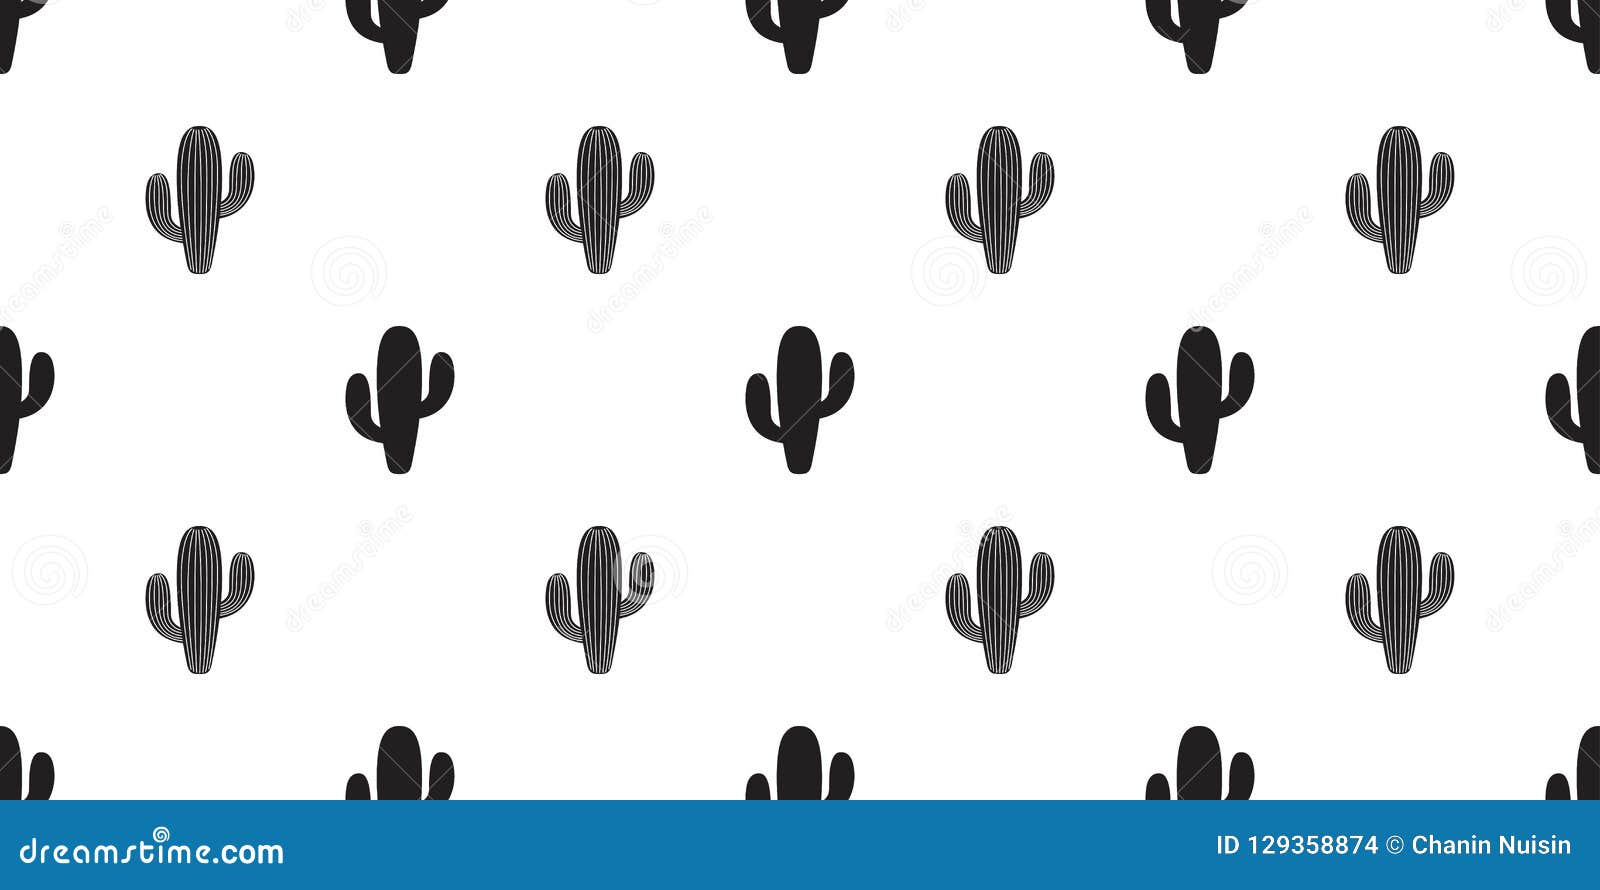 cactus seamless pattern  flower desert botanica plant garden scarf  tile background cartoon repeat wallpaper